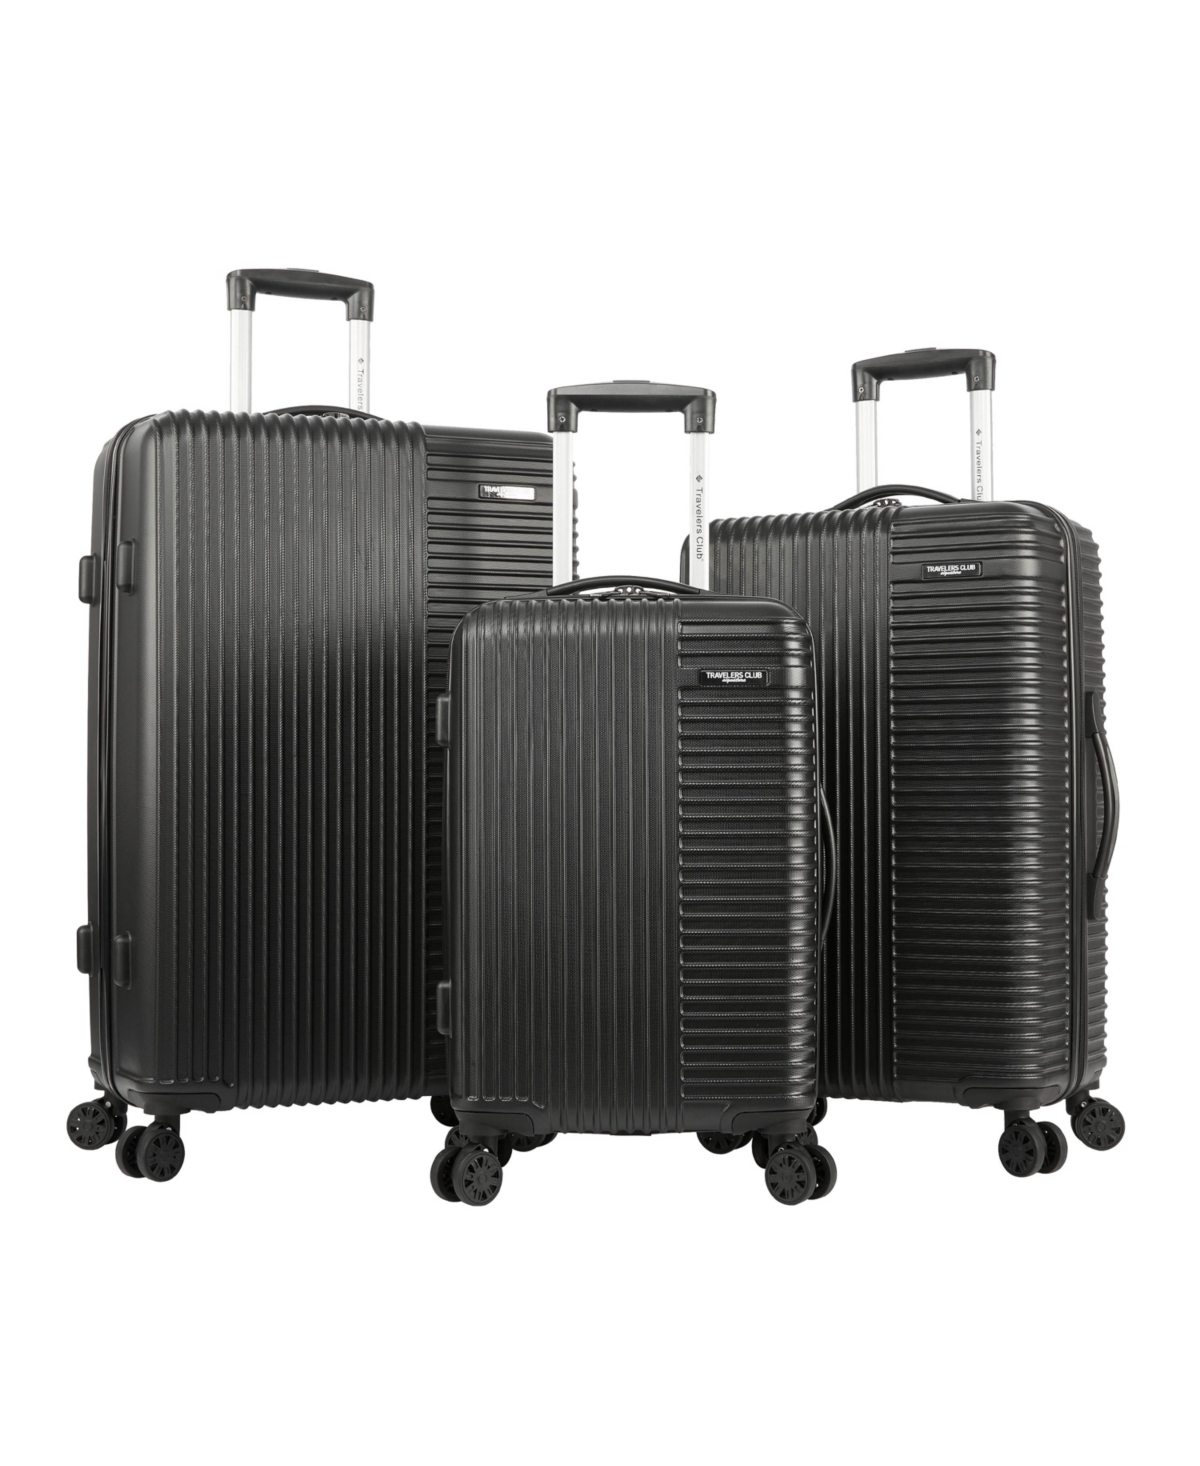 Basette 3-Pc. Hardside Luggage Set, Created for Macy's - Lilac